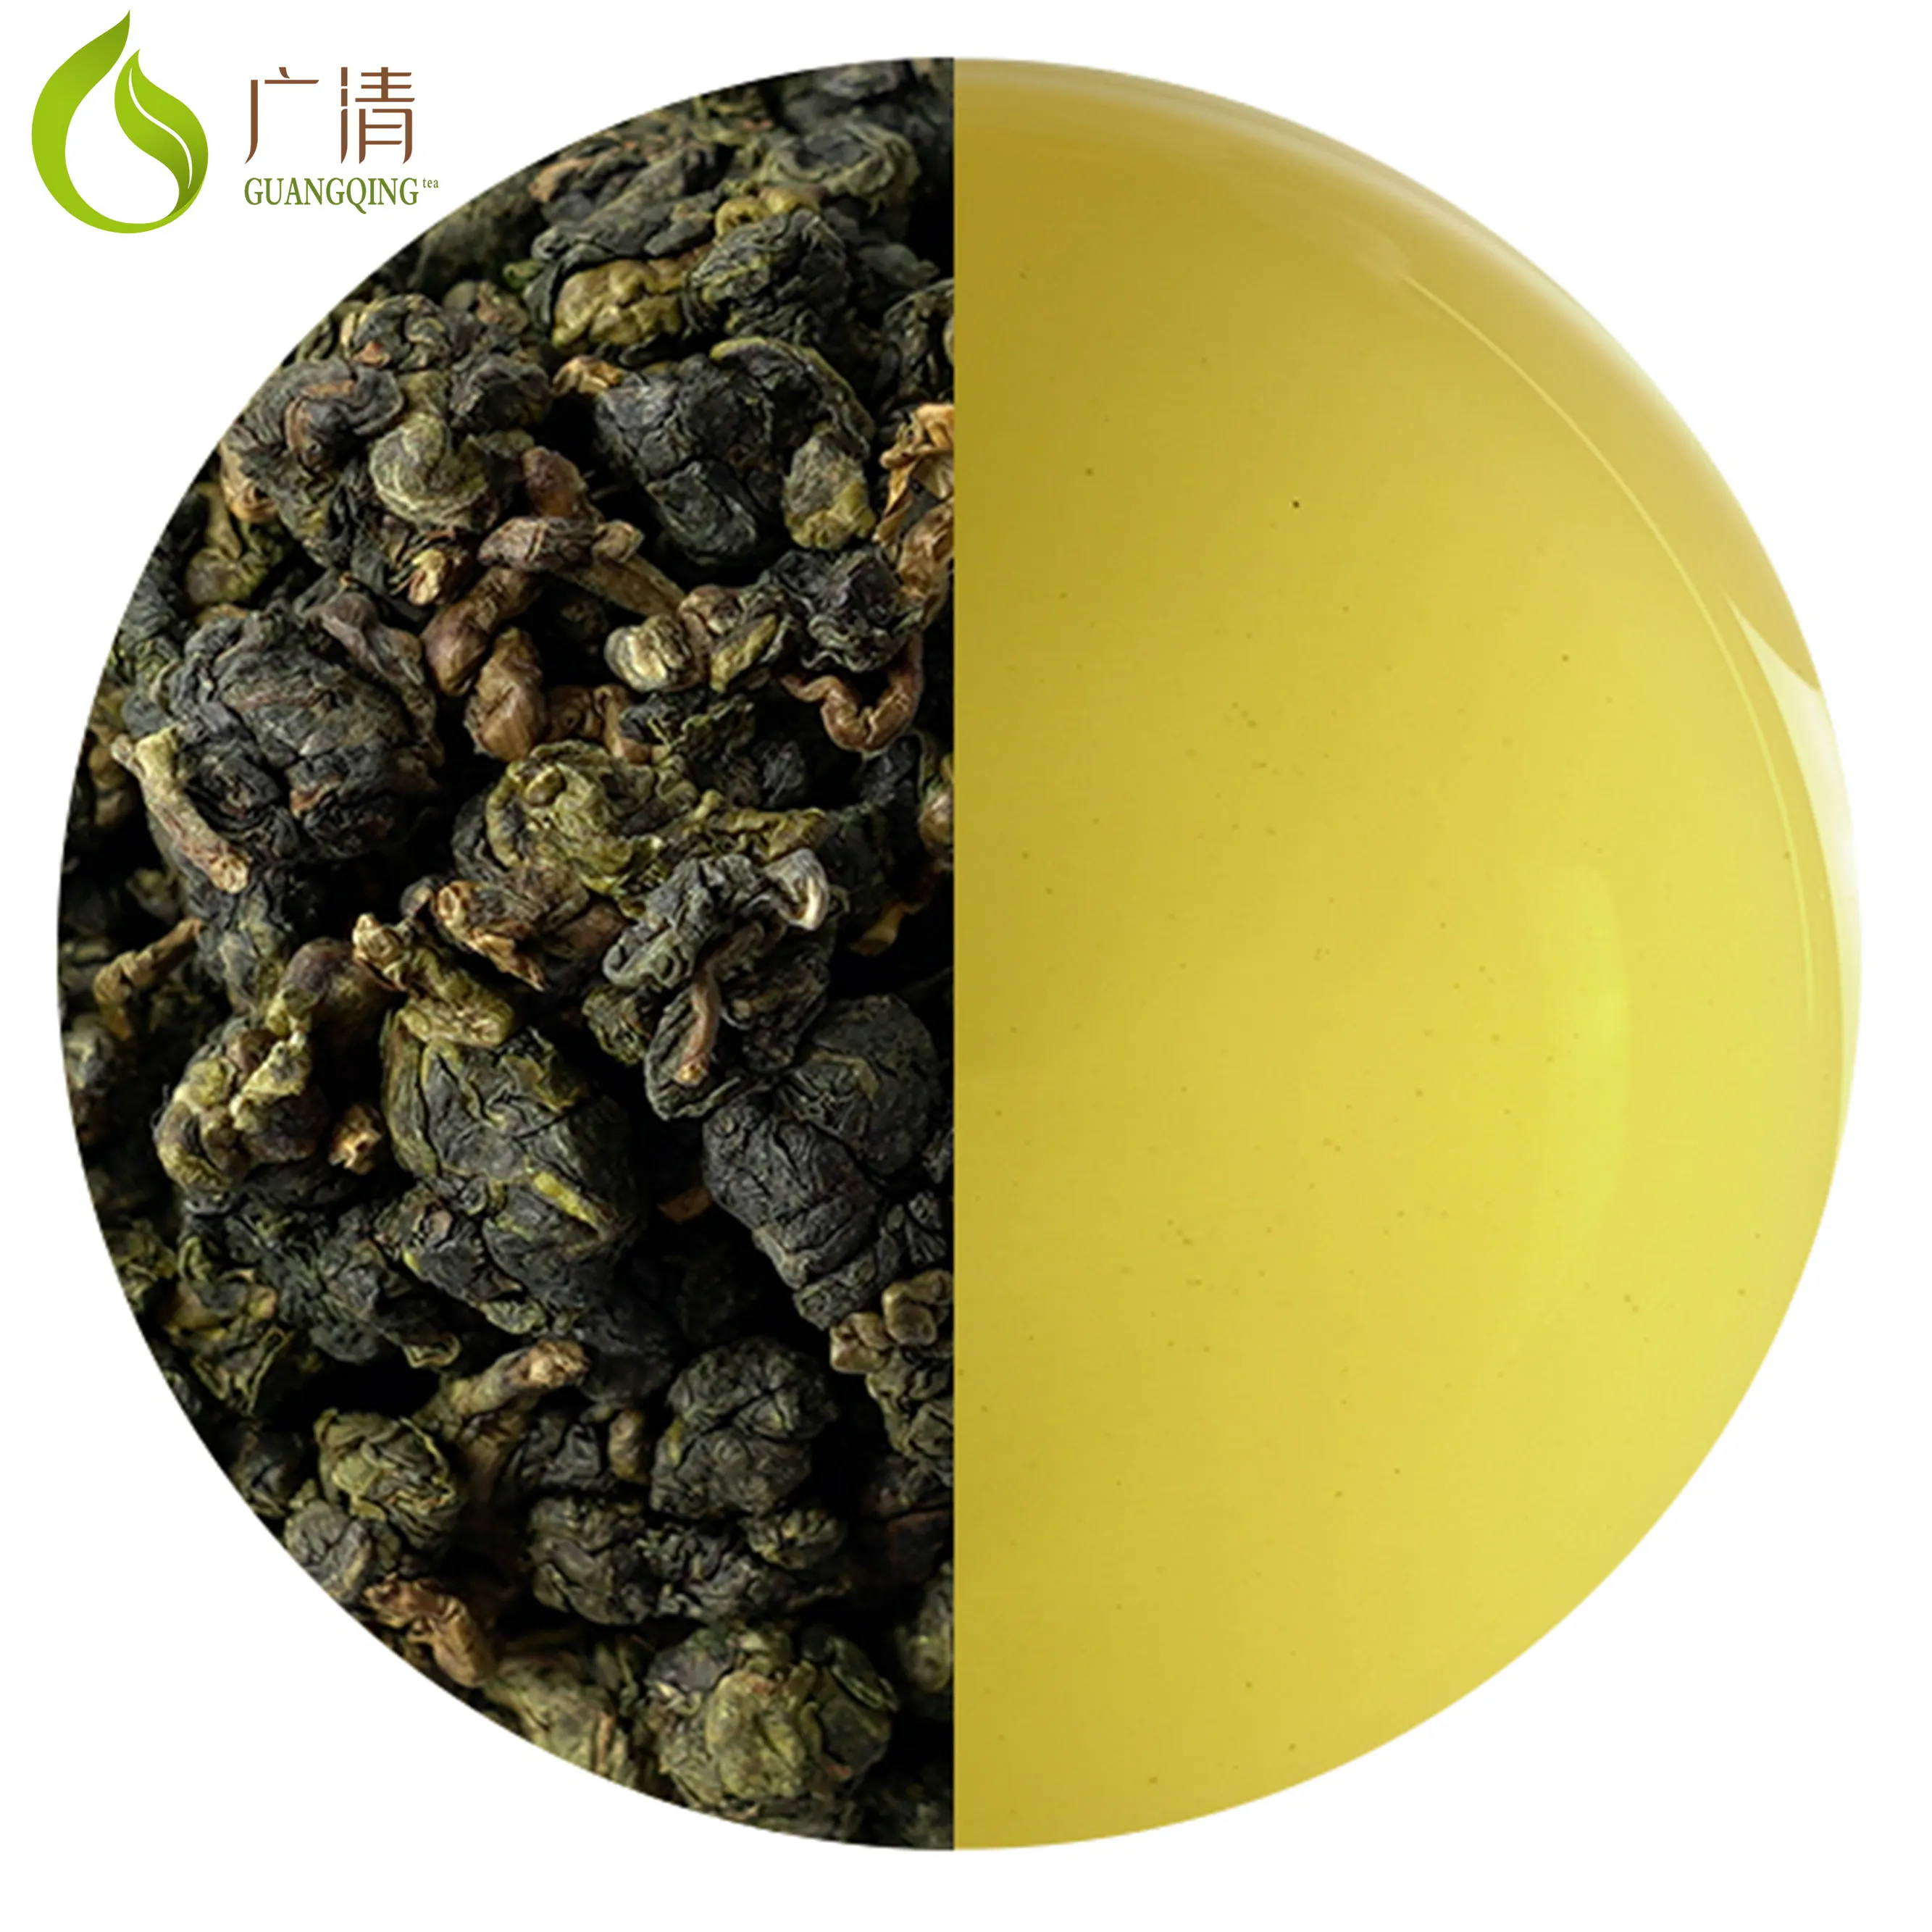 GUANGQING Taiwan High quality Sweet Rich Aroma For Gift Tea High Mountain Dong Ding Oolong tea